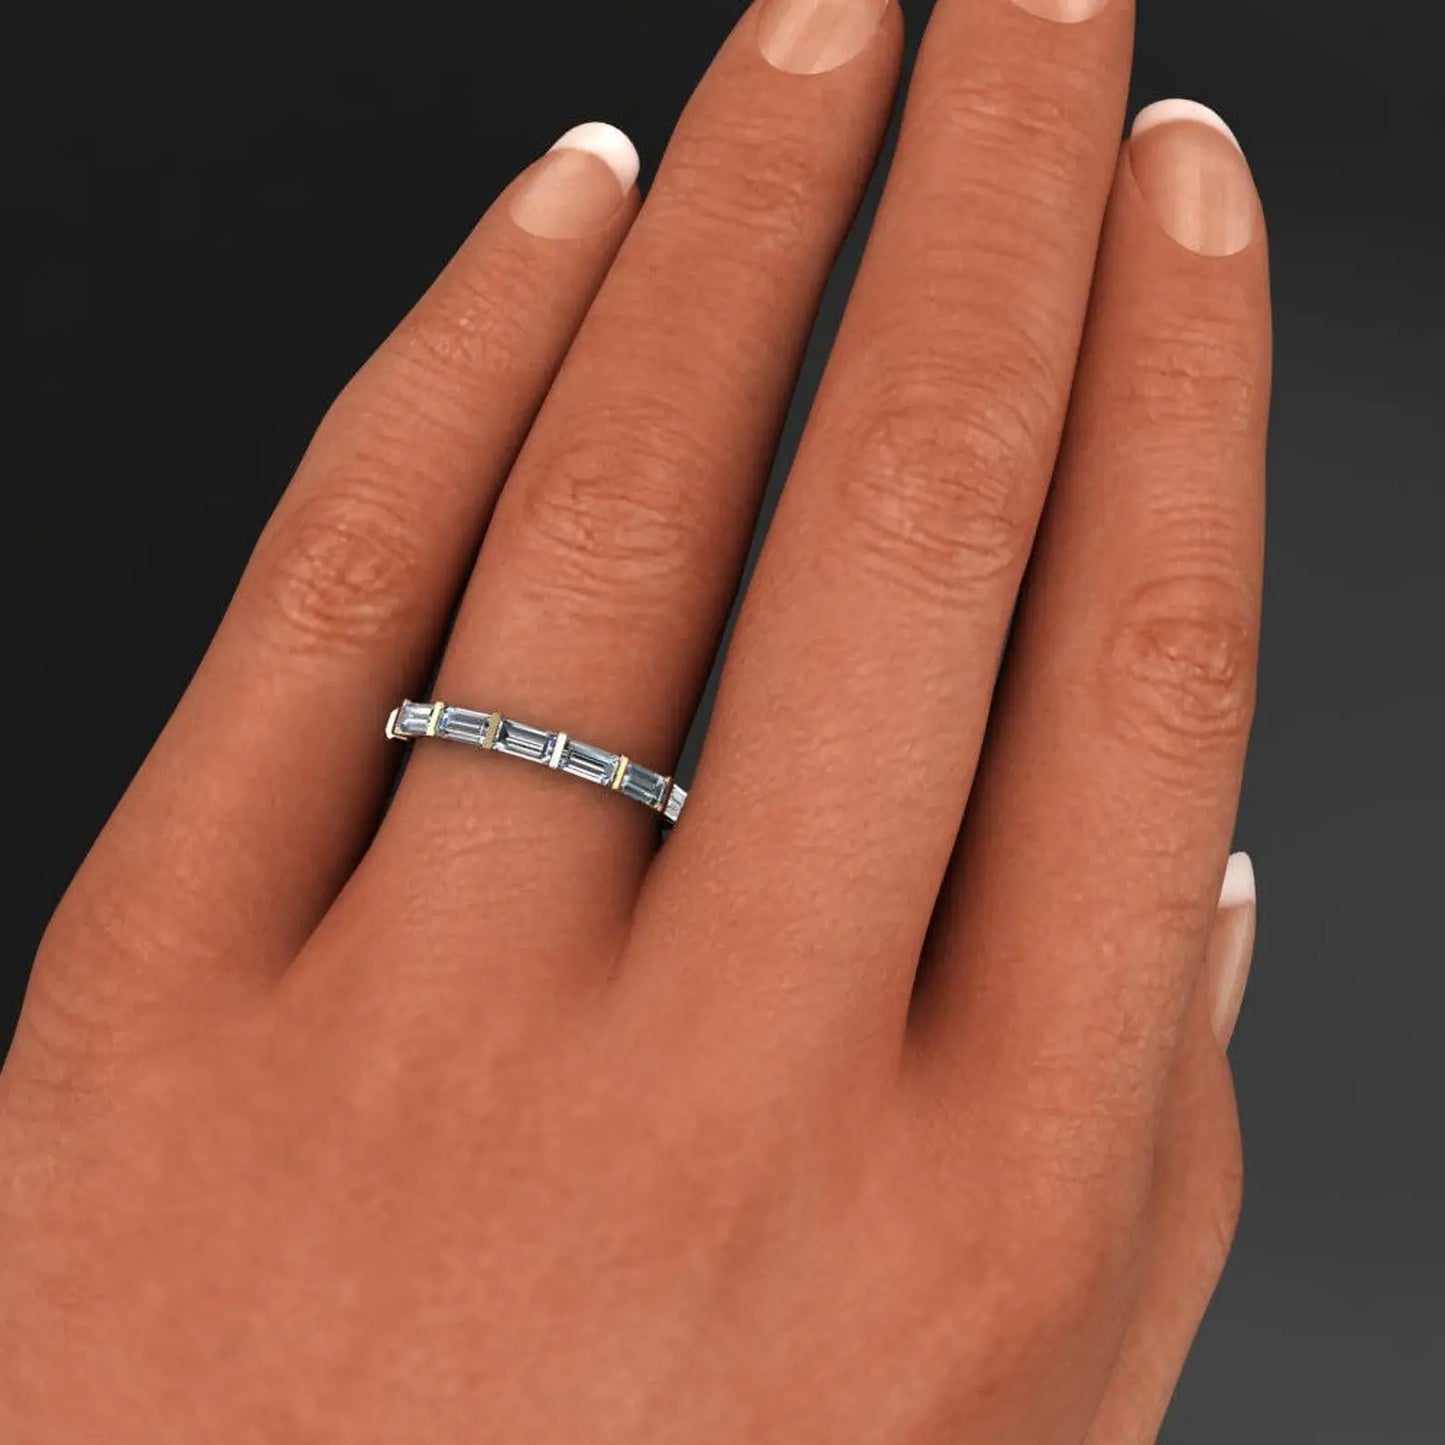 lexie ring – 1 carat moissanite anniversary band, ZAYA moissanite baguette ring - J Hollywood Designs